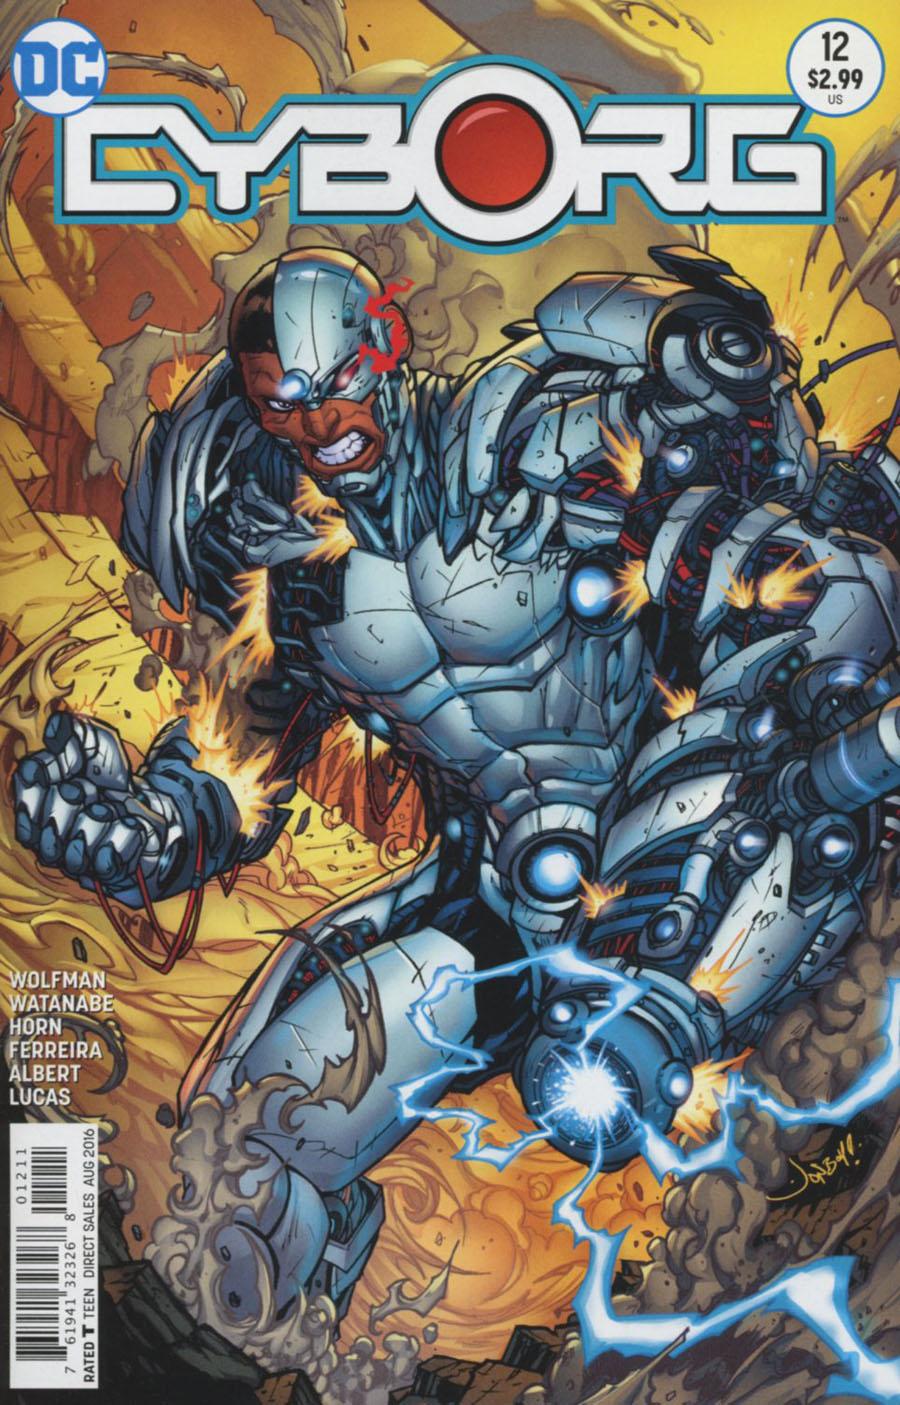 Cyborg Vol. 1 #12